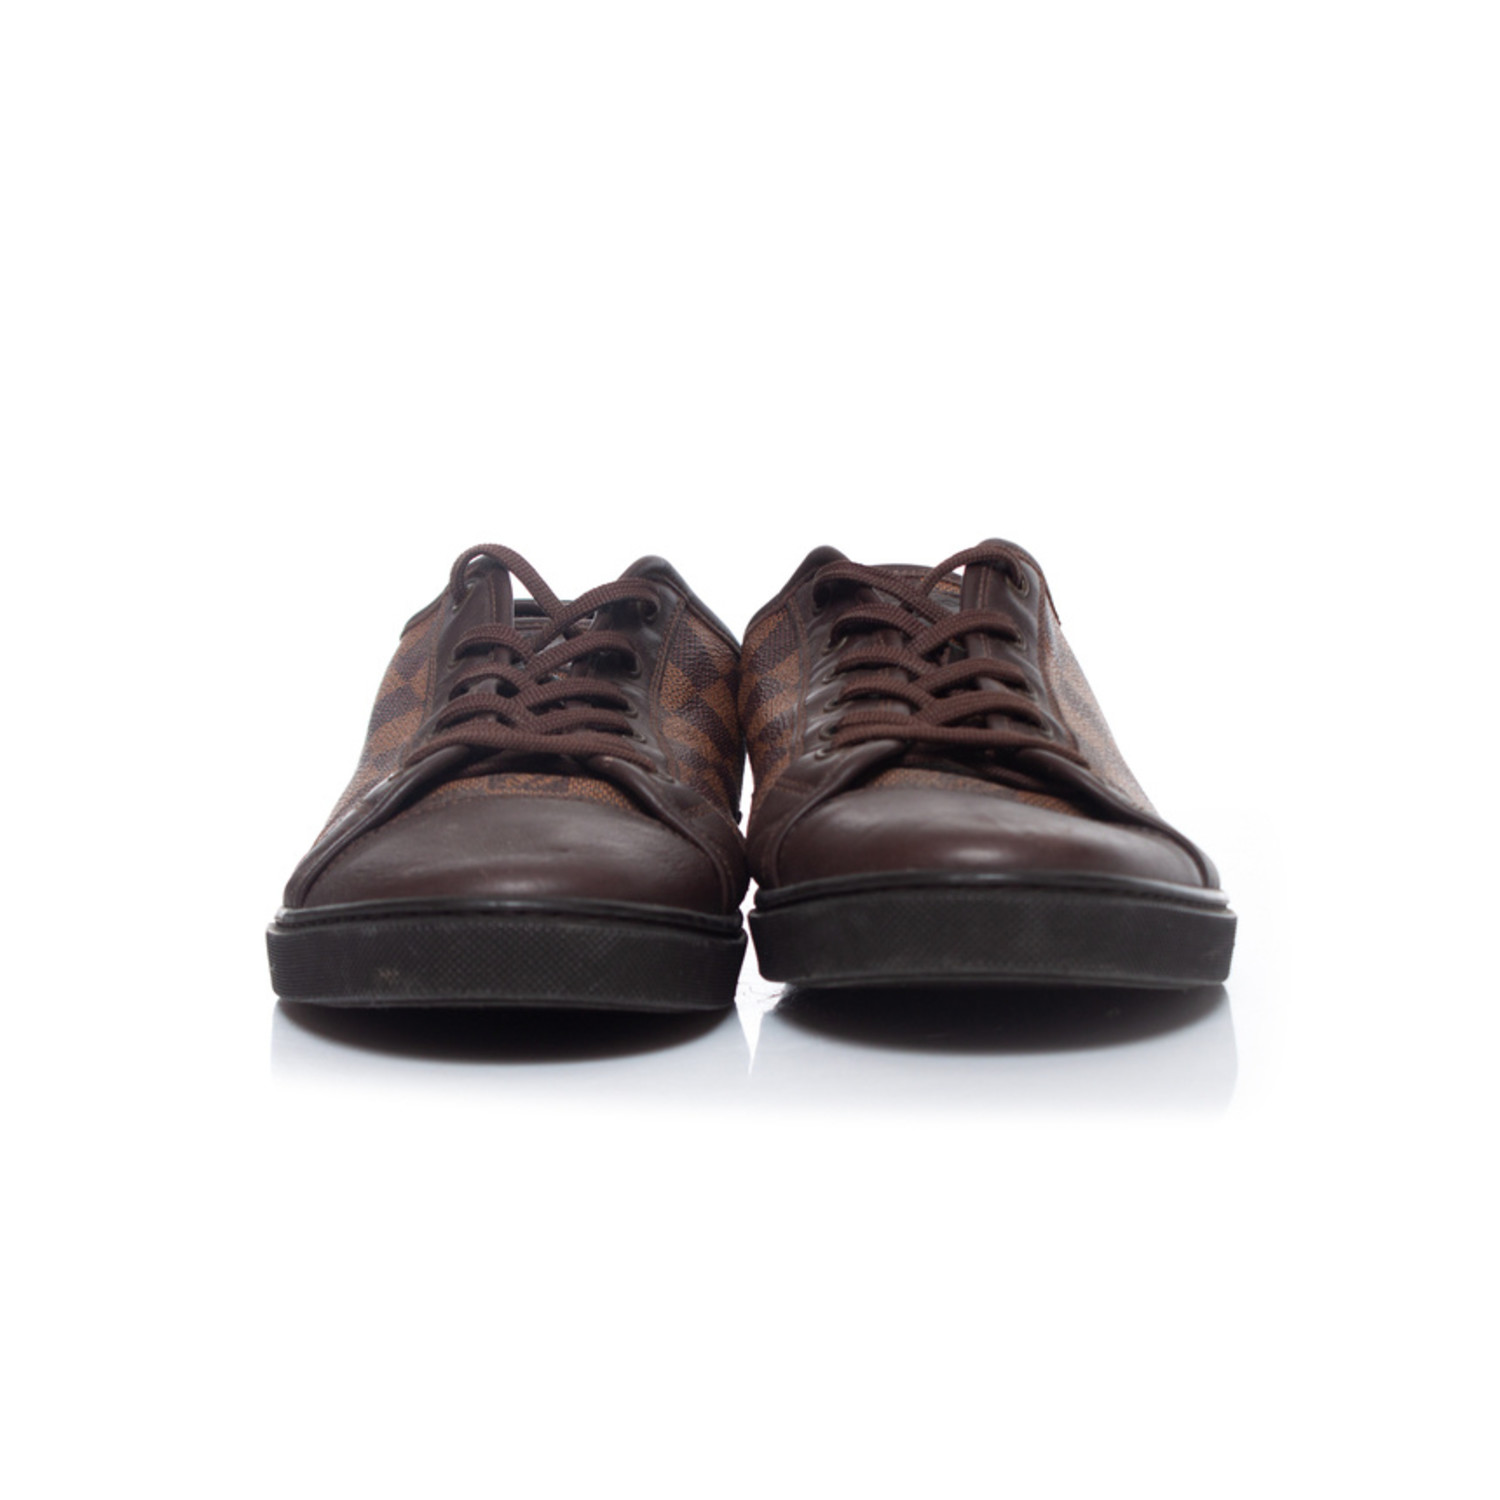 Louis Vuitton Brown Damier Ebene Canvas Low Top Sneakers UK 8/EU